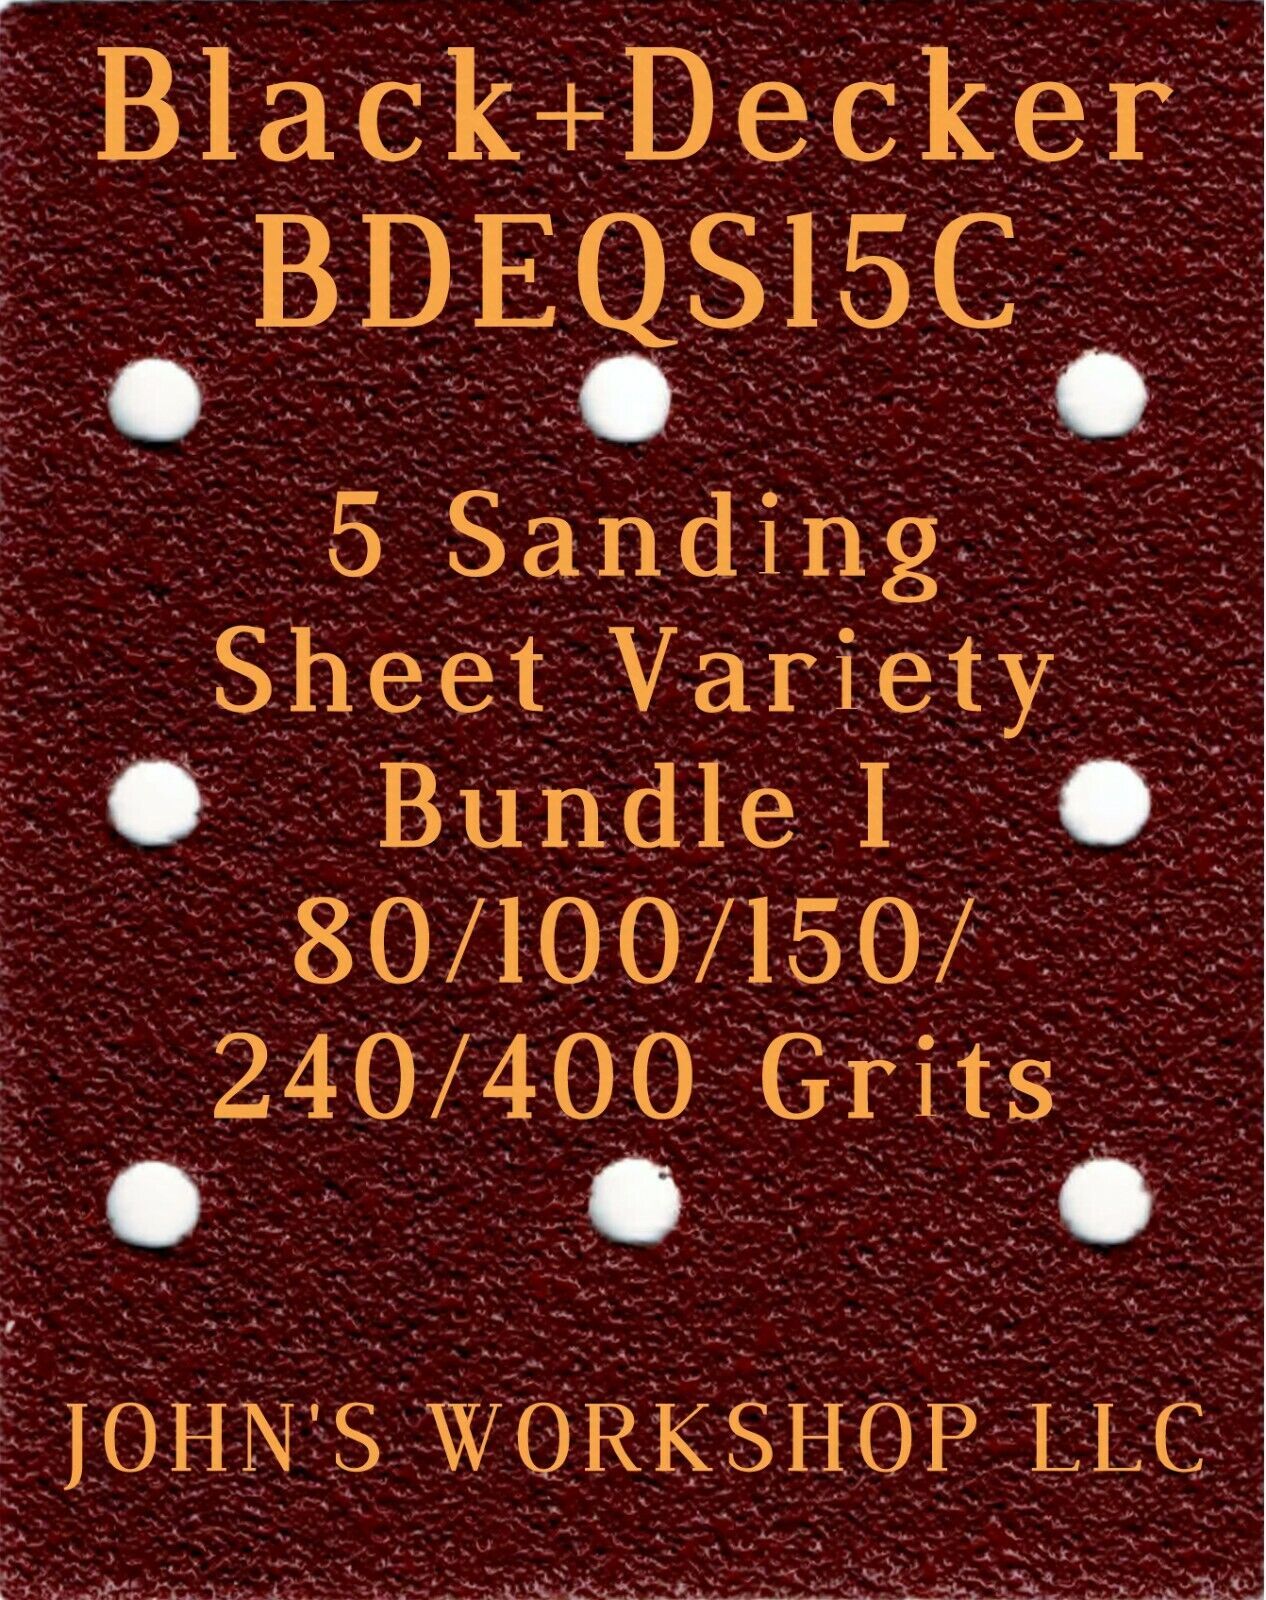 Black+Decker BDEQS15C - 80/100/150/240/400 Grits - 5 Sandpaper Variety Bundle I - £3.93 GBP